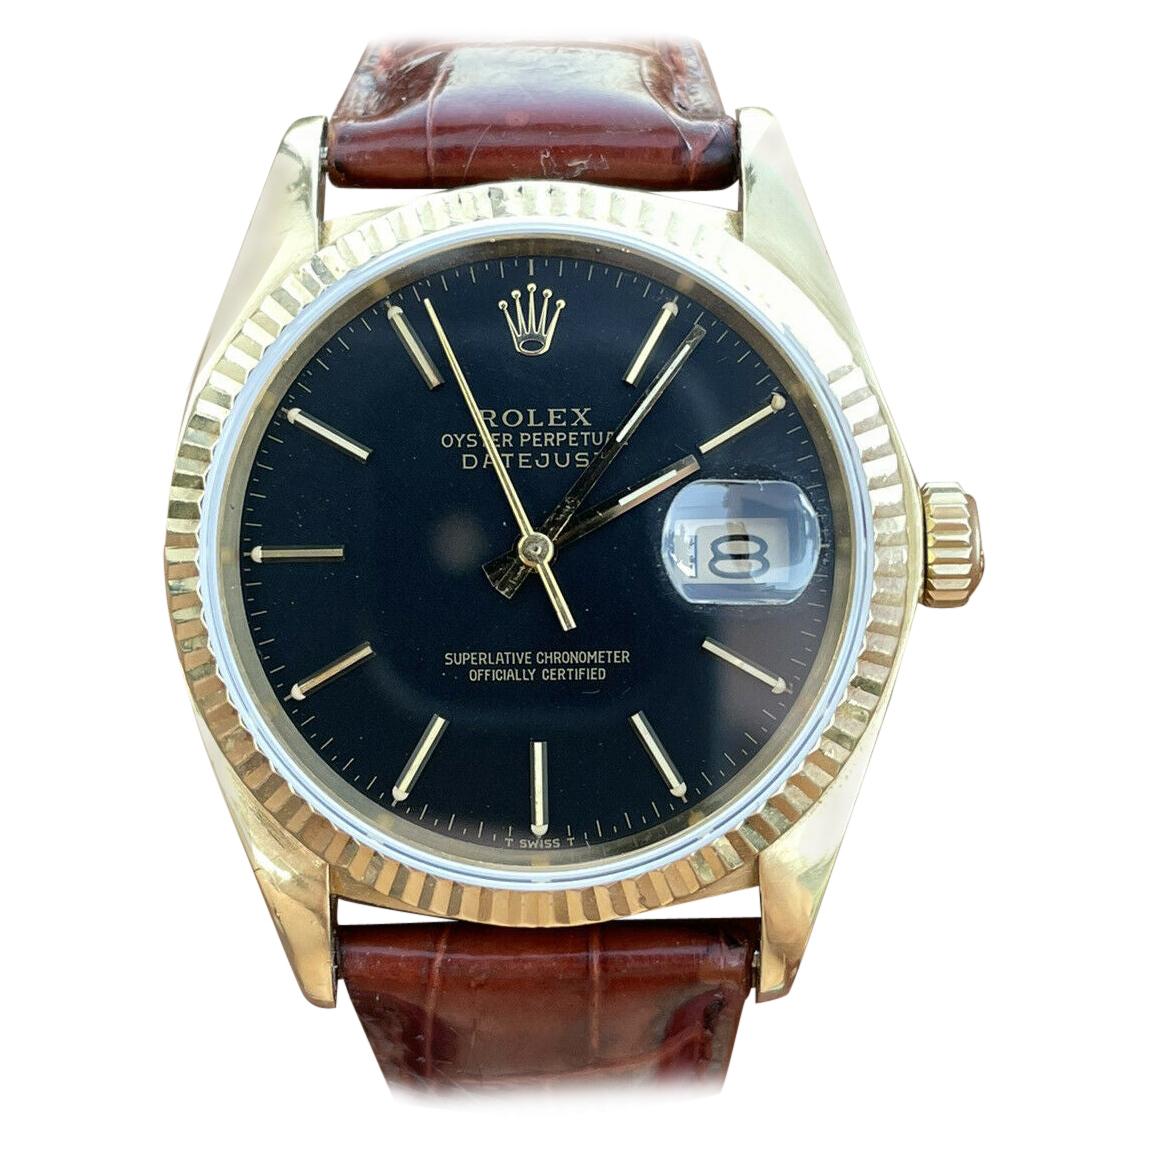 Vintage Rolex Datejust 16018 Black Dial 18k Gold, Circa 1979